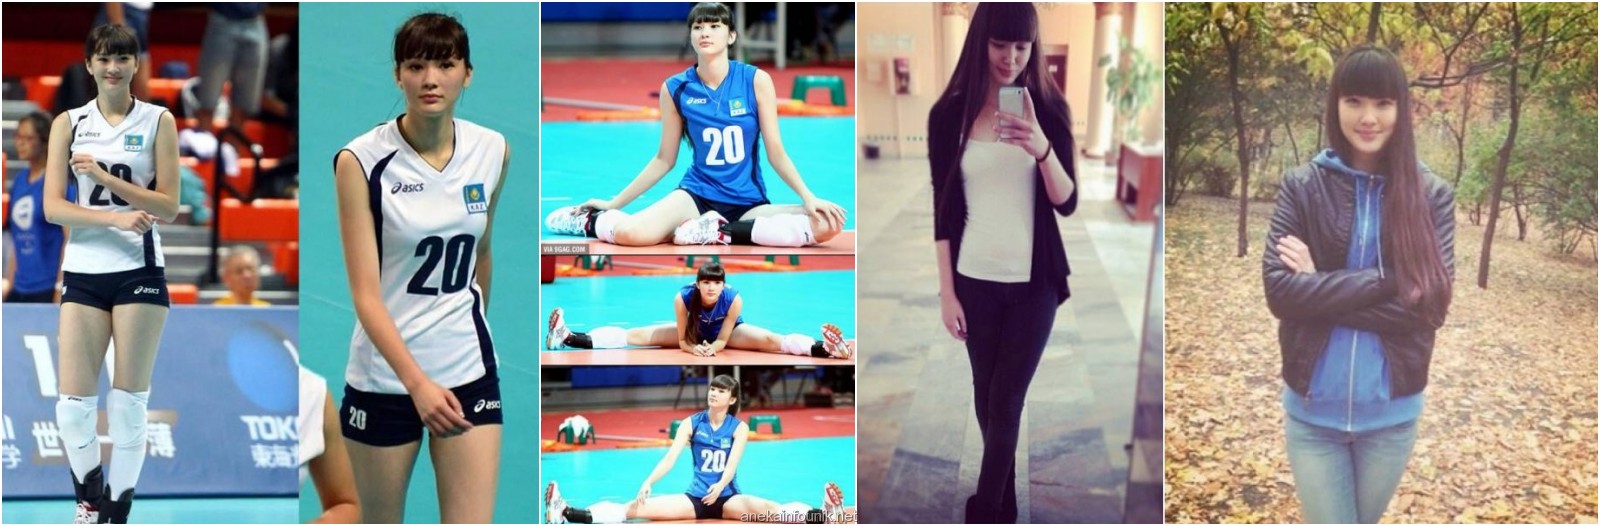 foto-hot-sabina-altynbekova-di-facebook-dan-instagram.jpg